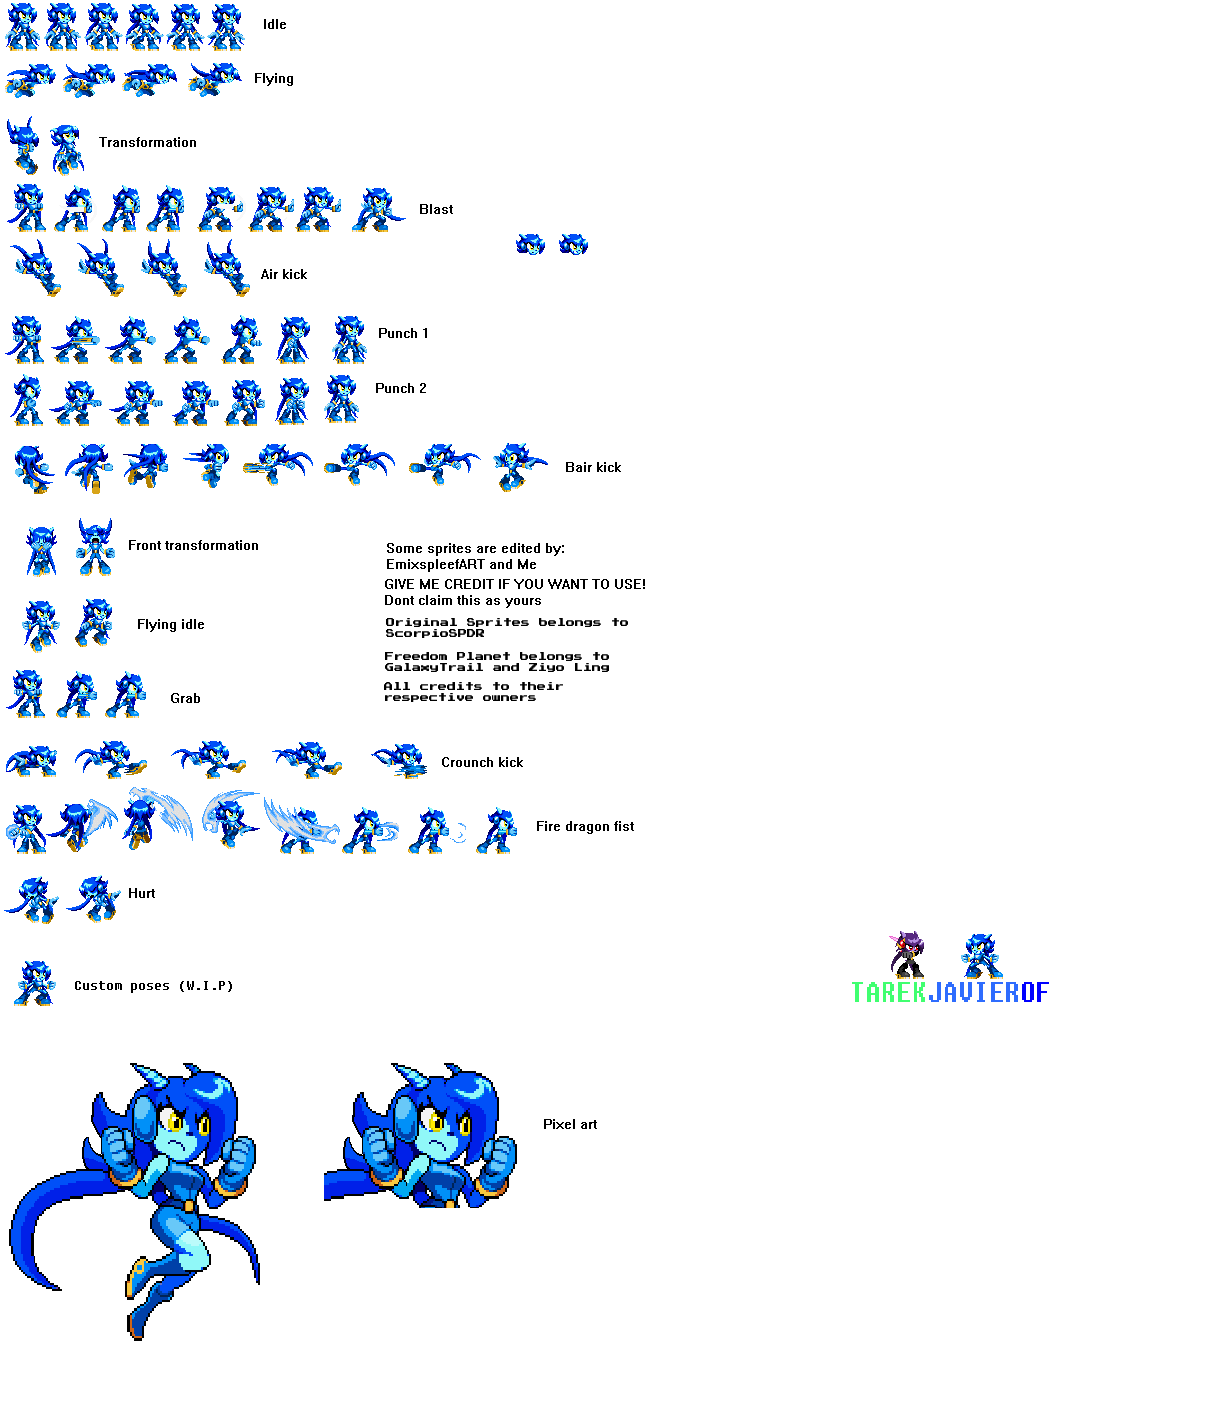 Sonic Sprite sheet variety pack. by parrishbroadnax on DeviantArt